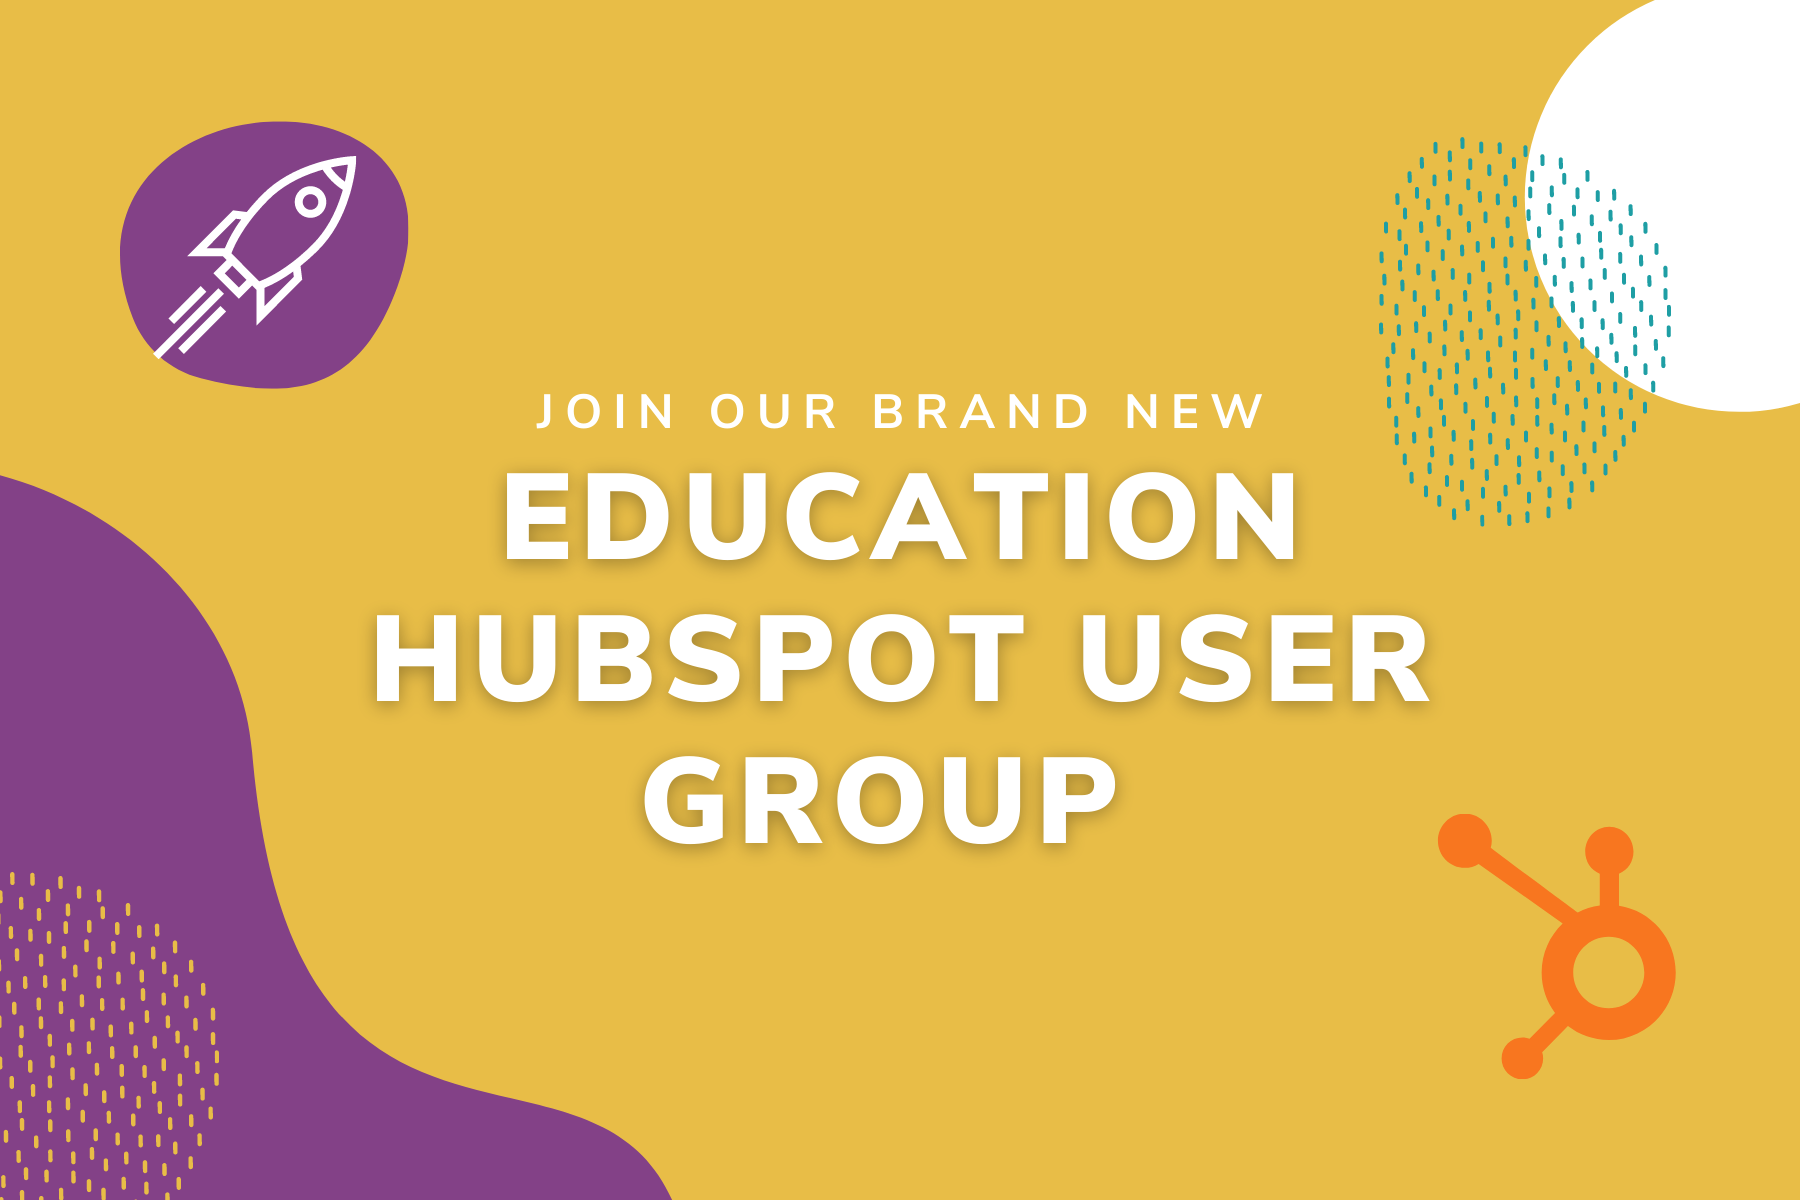 EMEA' s first ever education HubSpot user group